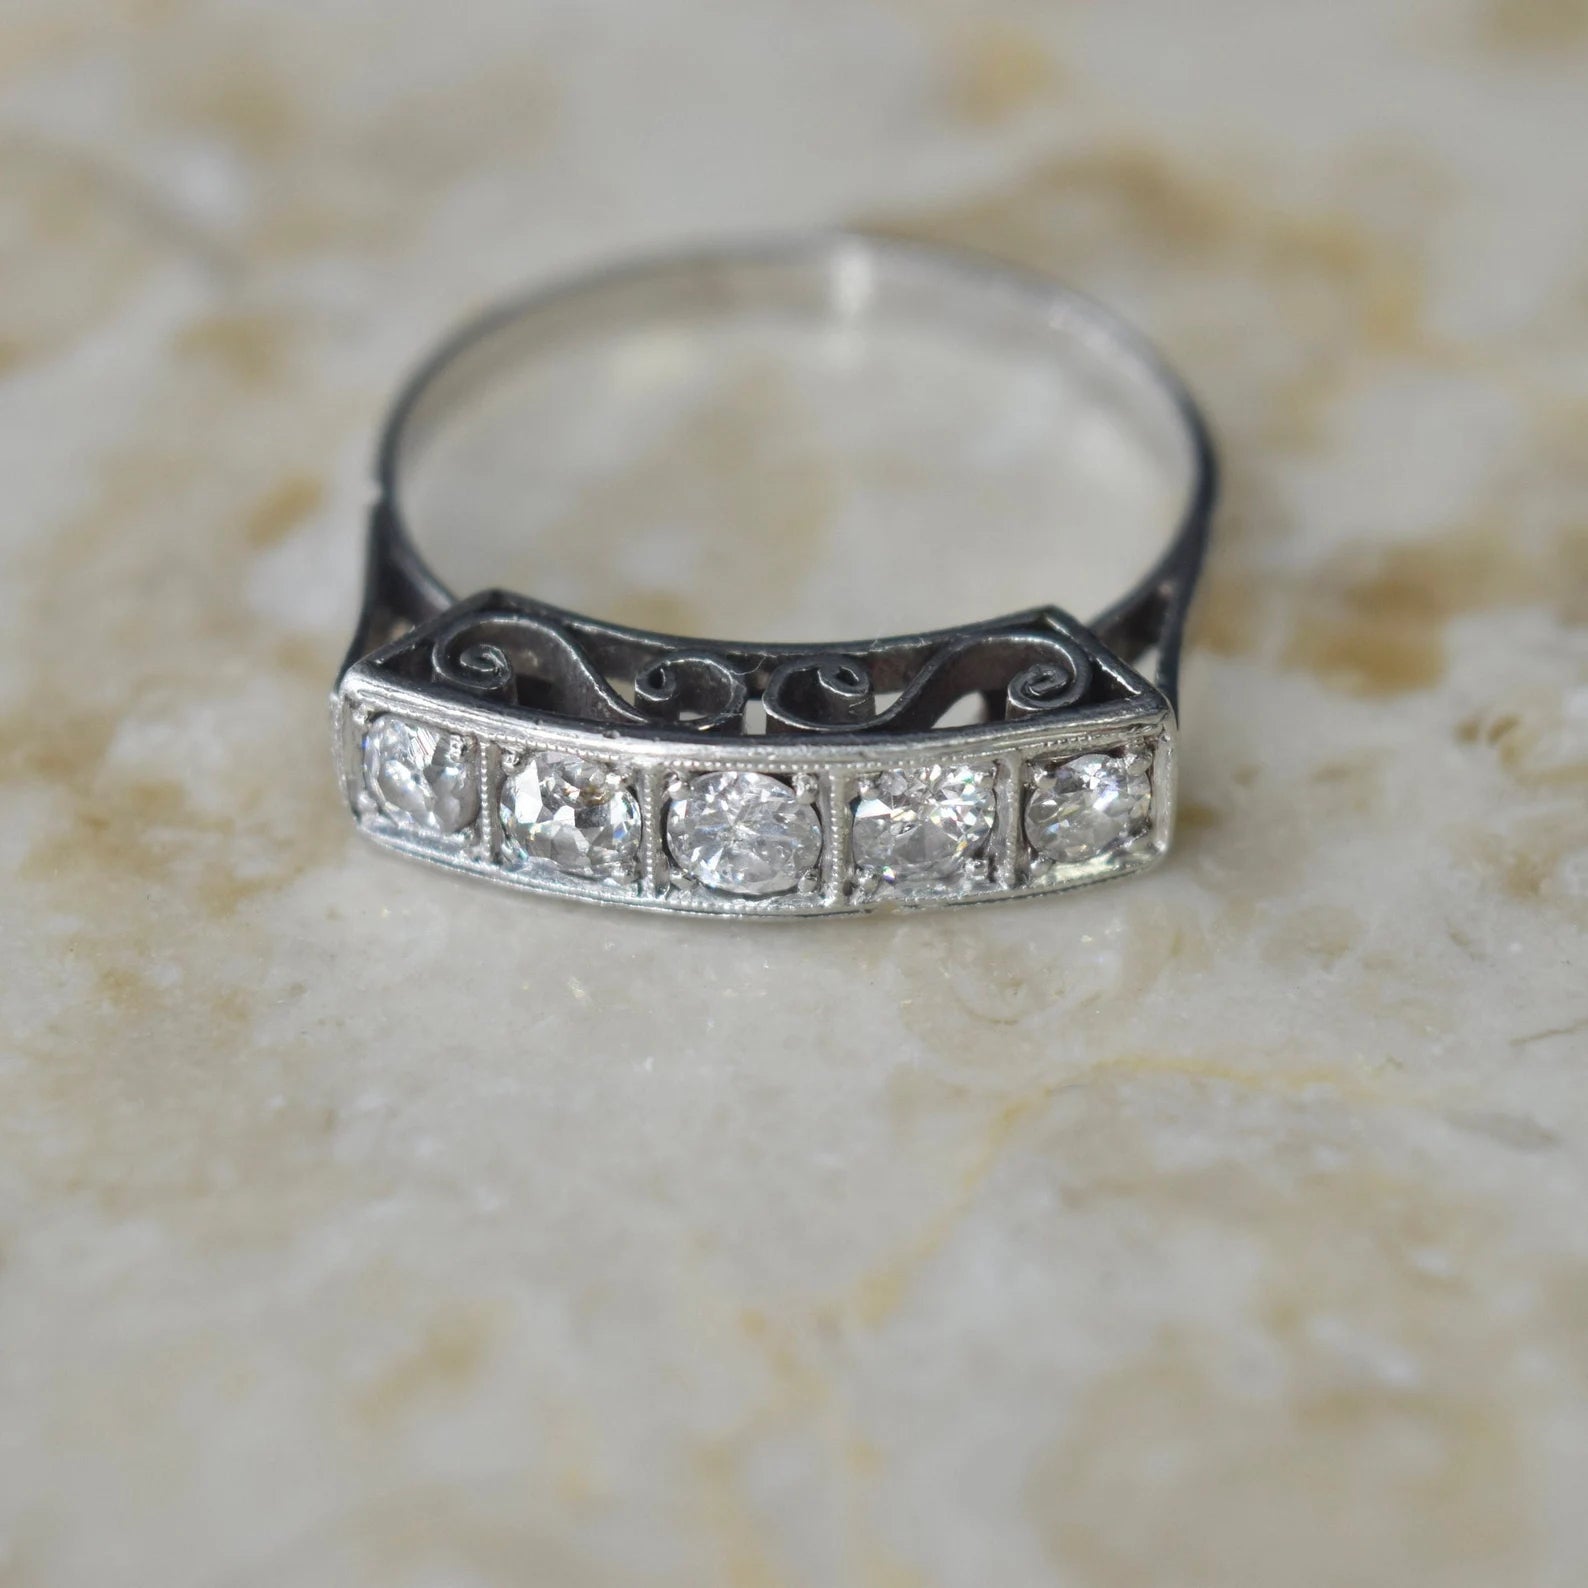 Antique Edwardian 18k White Gold Old Mine Cut Diamond Five Stone Band Ring